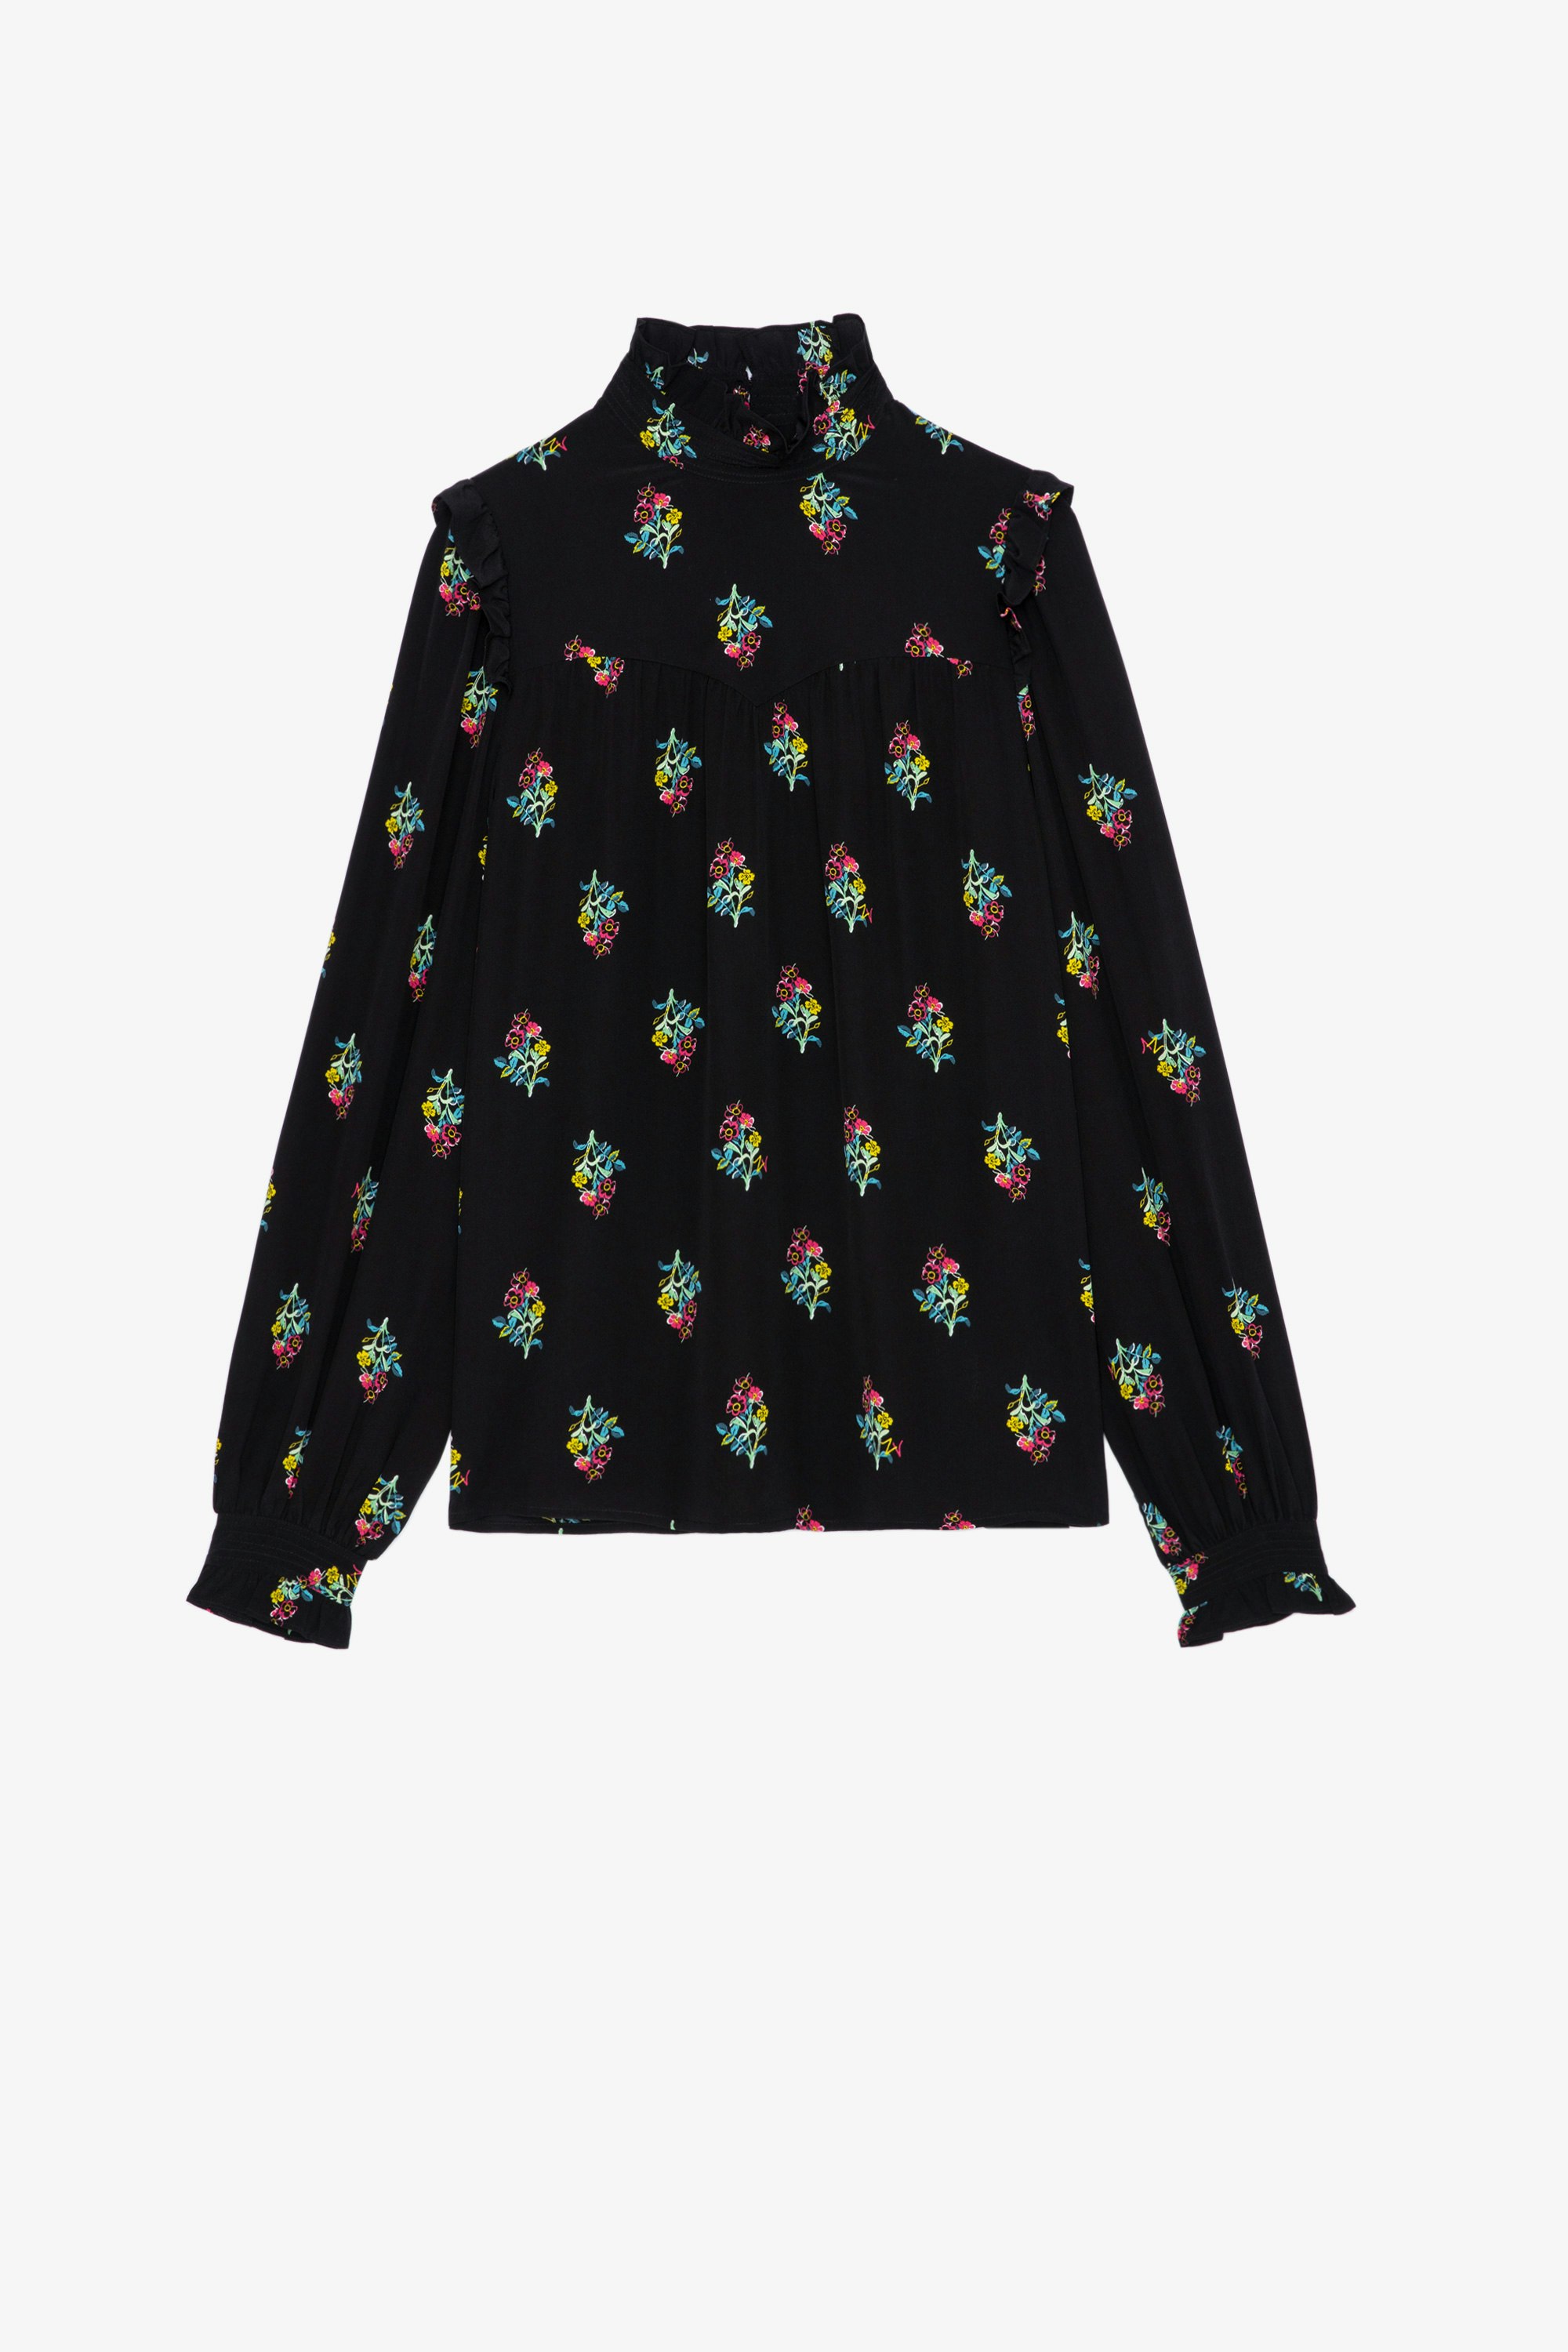 Tia Polka Flowers Silk Shirt Women’s black silk shirt with buttoned collar and multicoloured floral motifs 